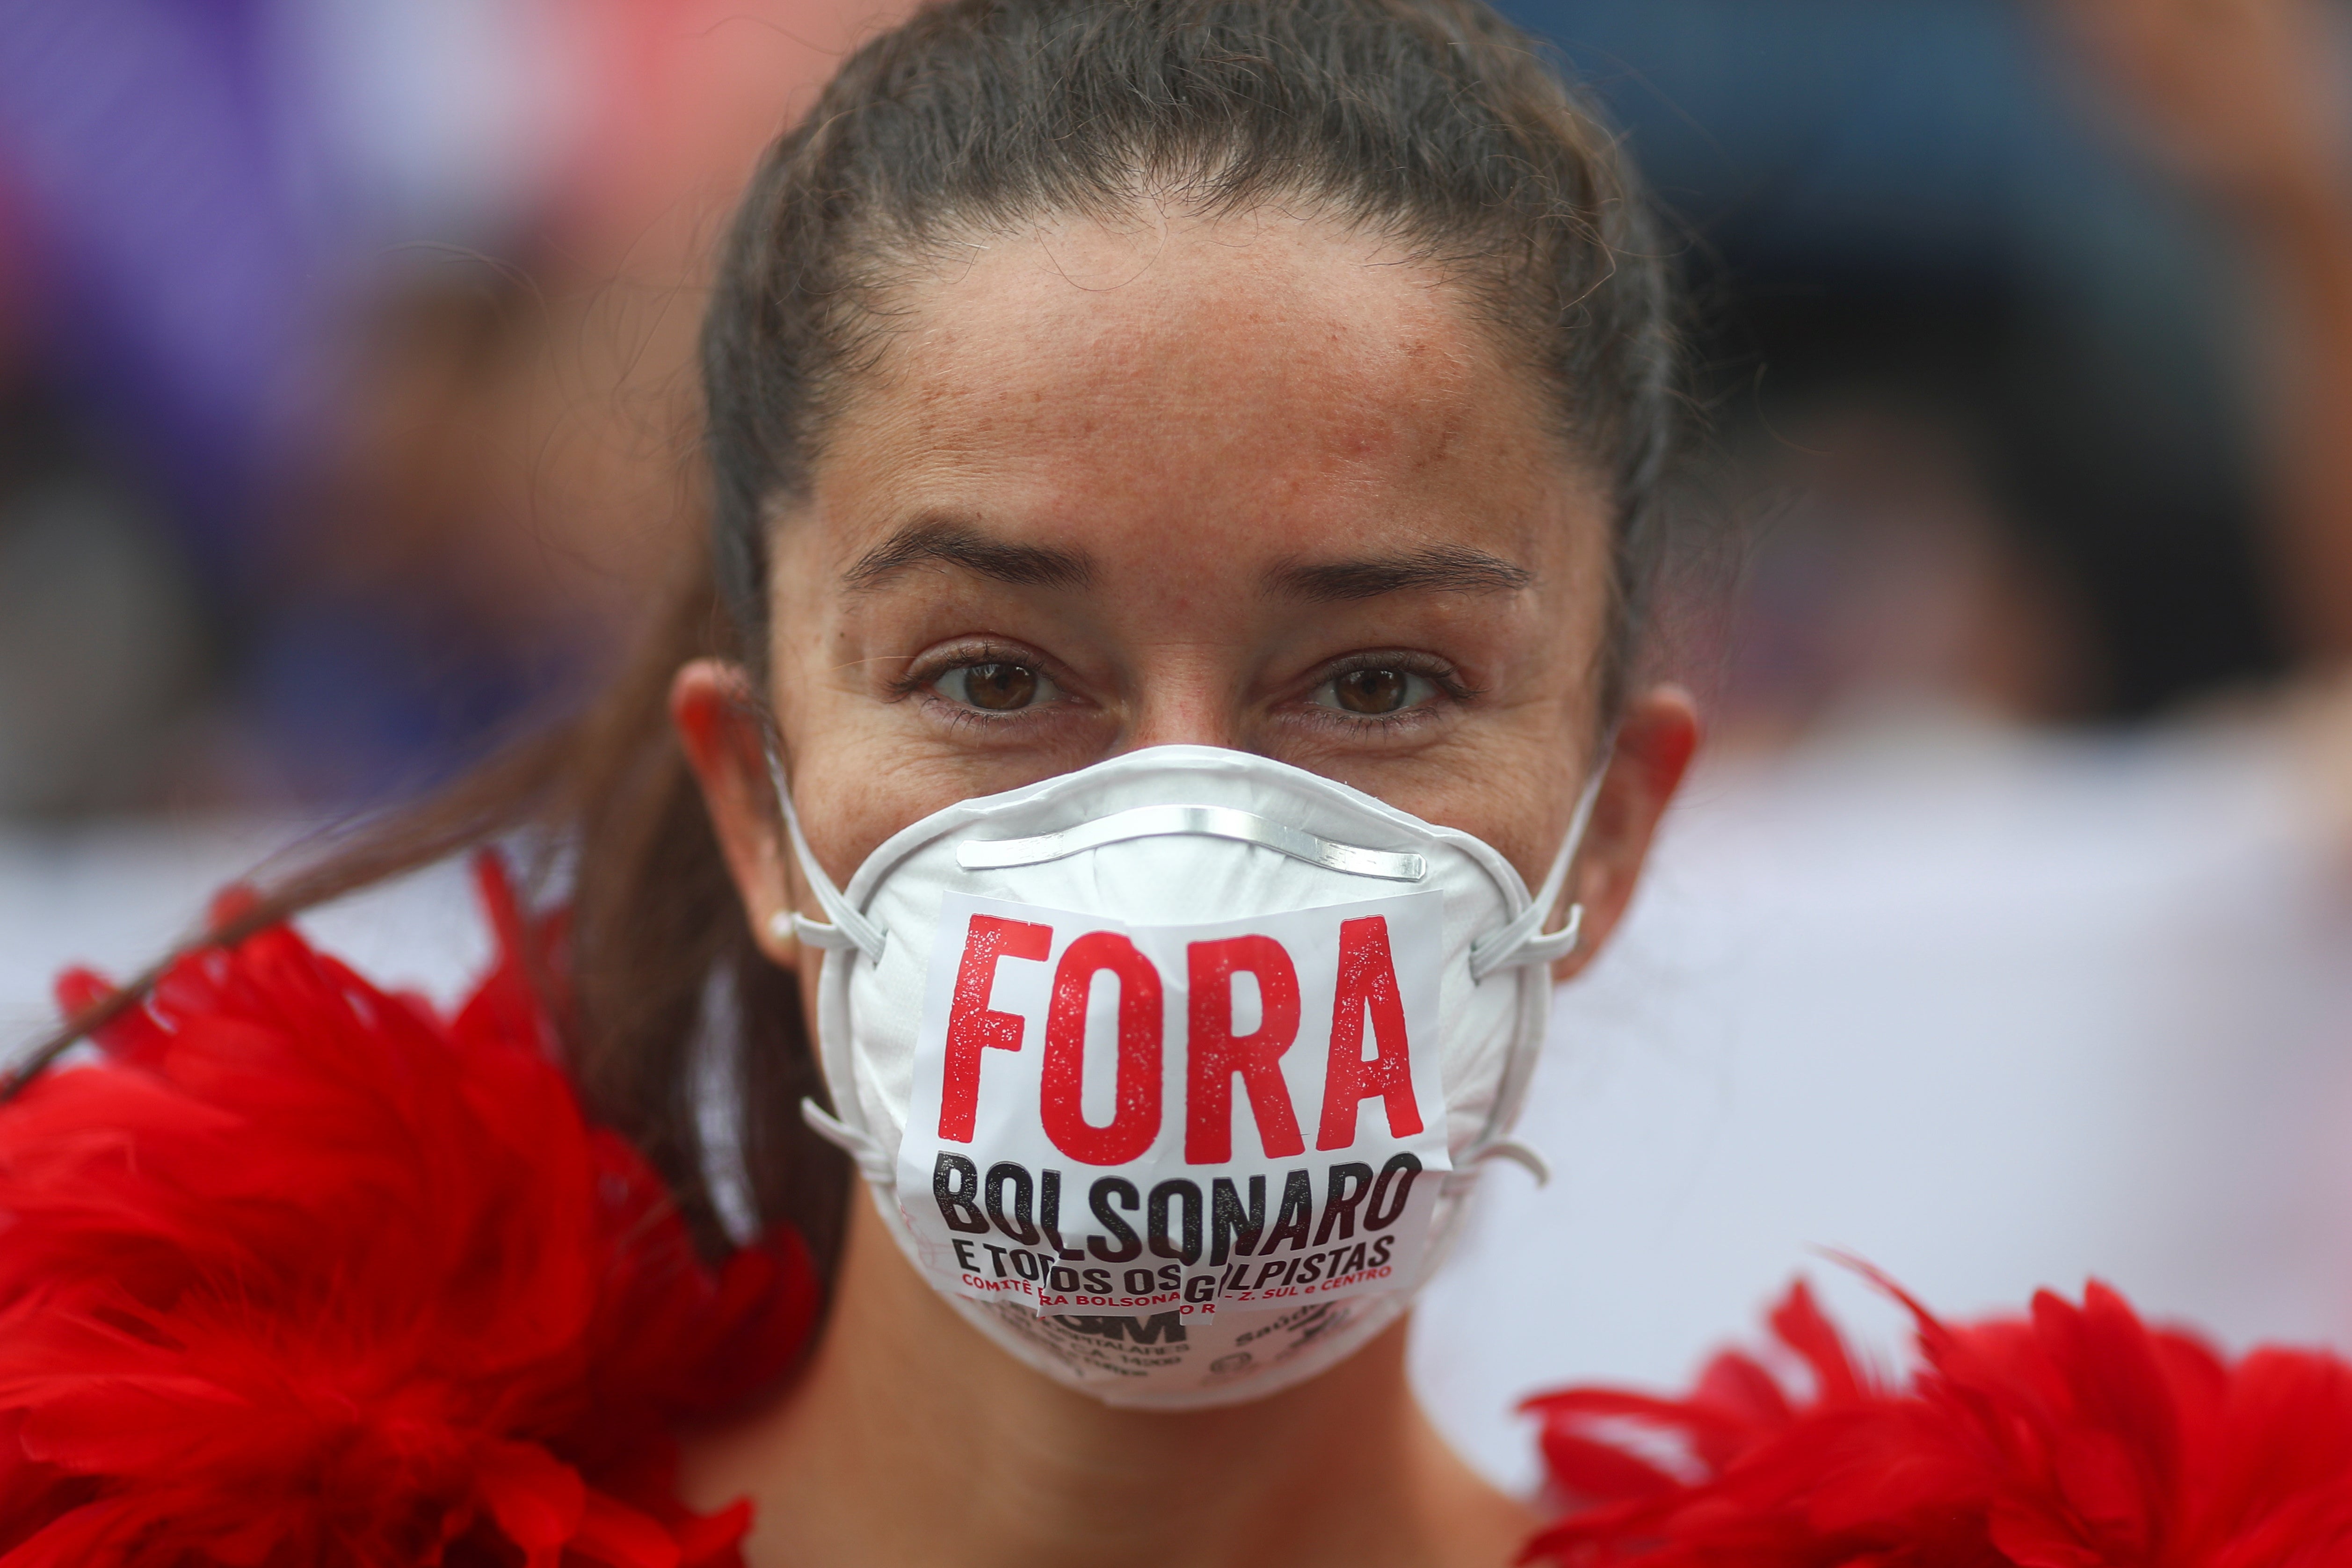 ‘Fora Bolsonaro’ (‘Bolsonaro out’): A woman protests against Brazil’s President Jair Bolsonaro’s handling of Covid-19